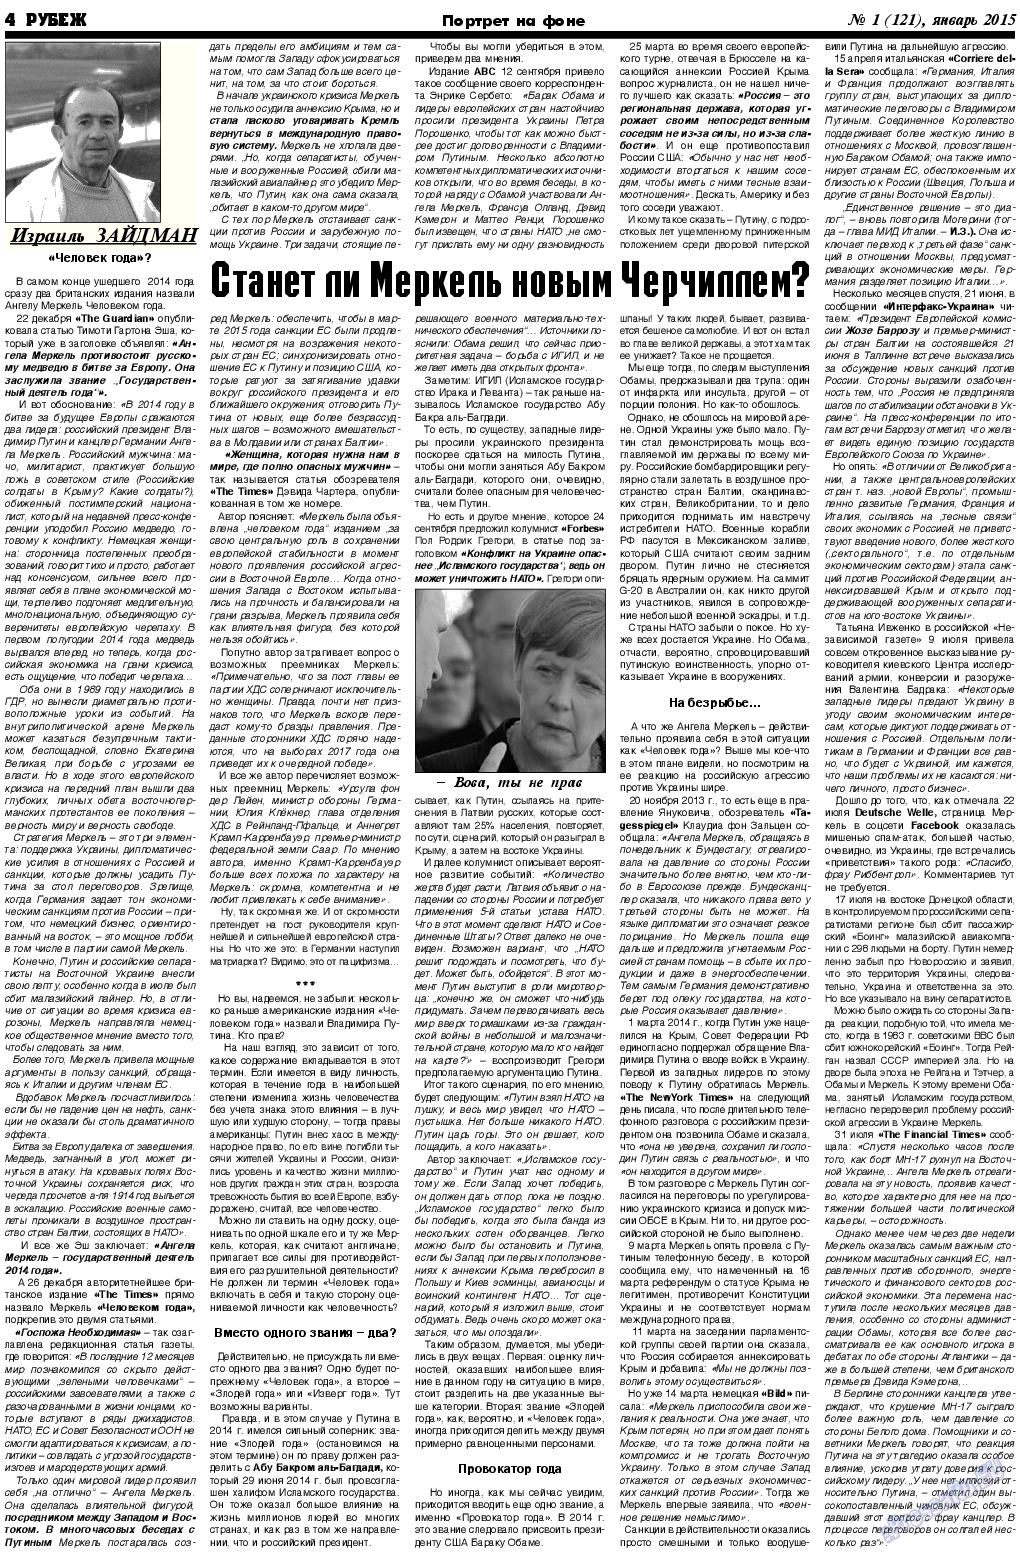 Рубеж, газета. 2015 №1 стр.4